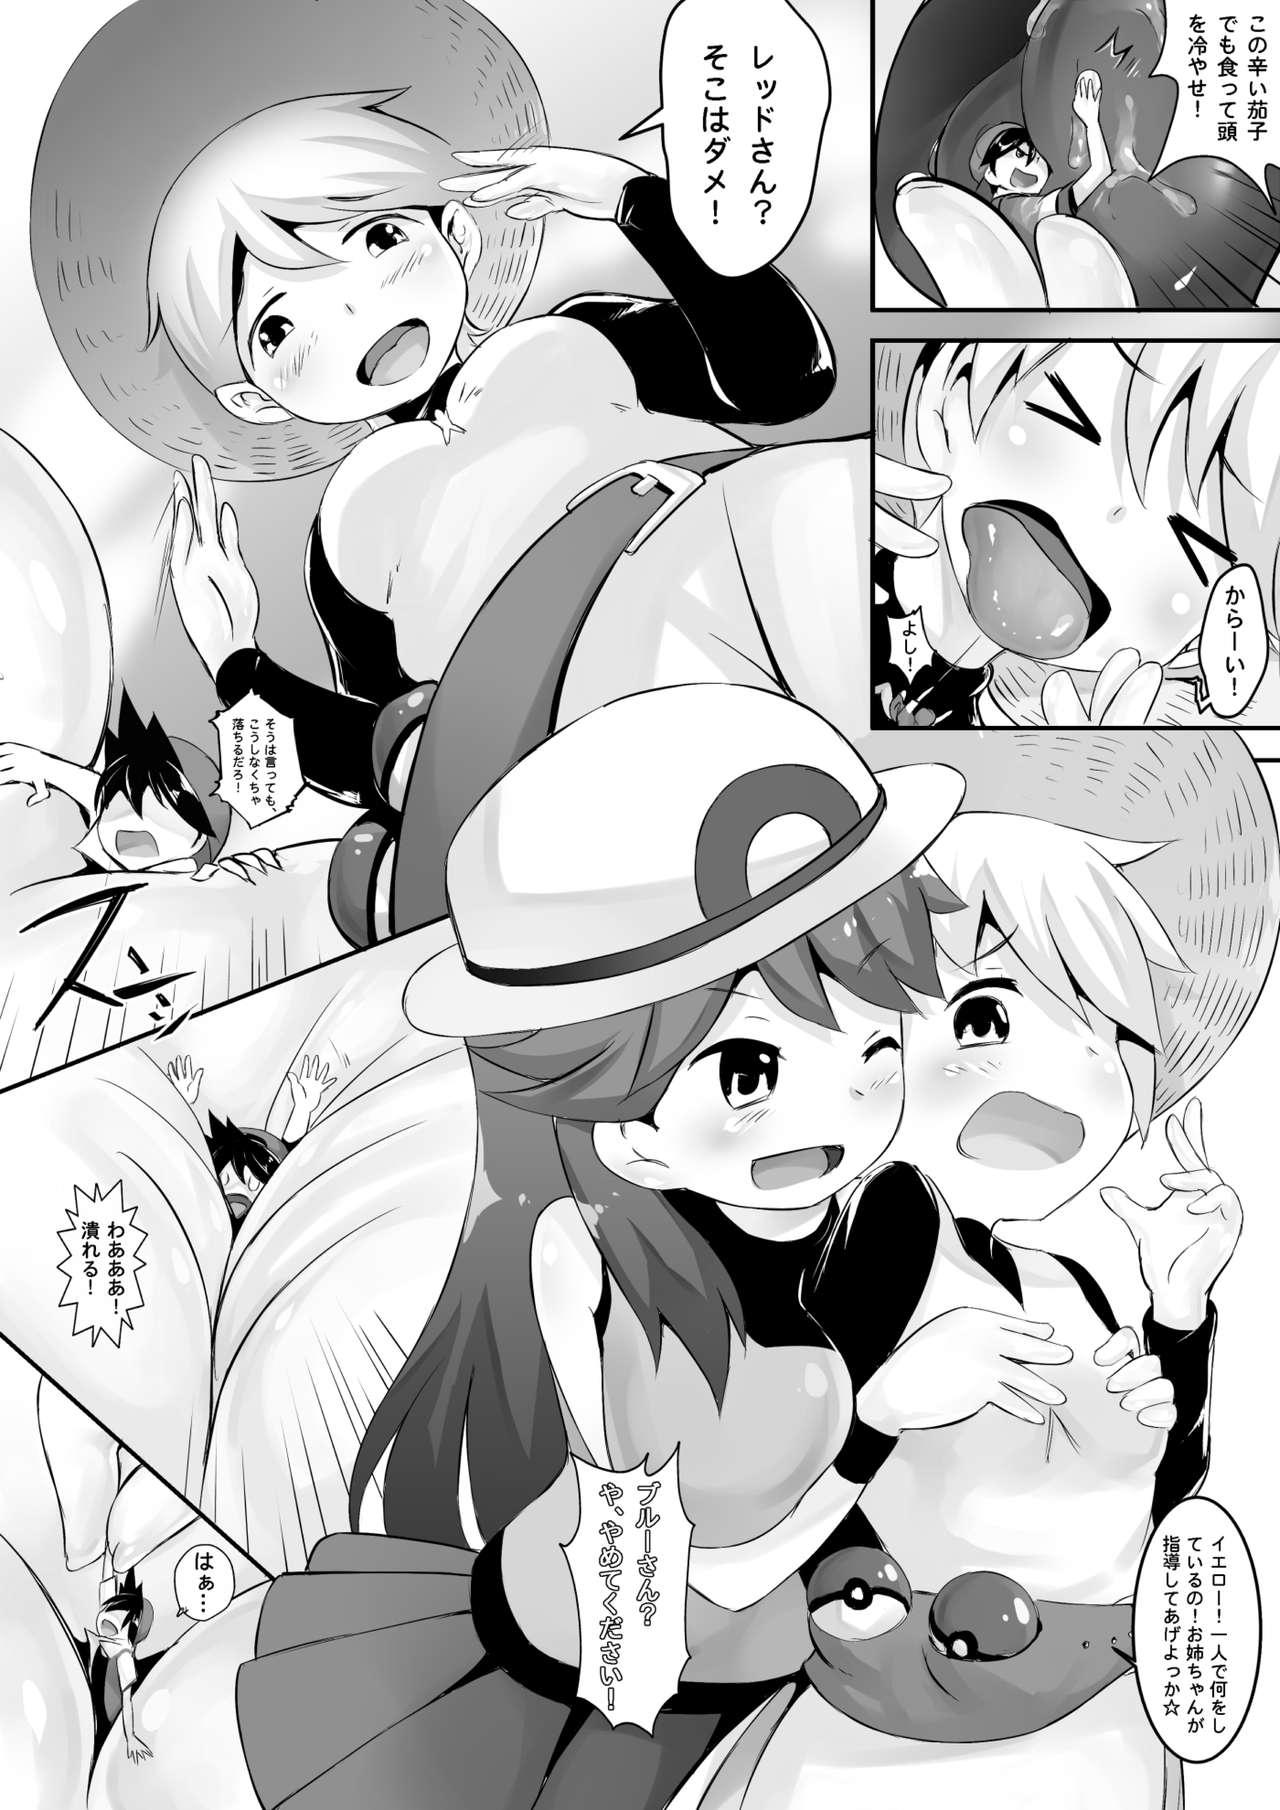 Oil Pokemon GS Friend?! - Pokemon Coroa - Page 8